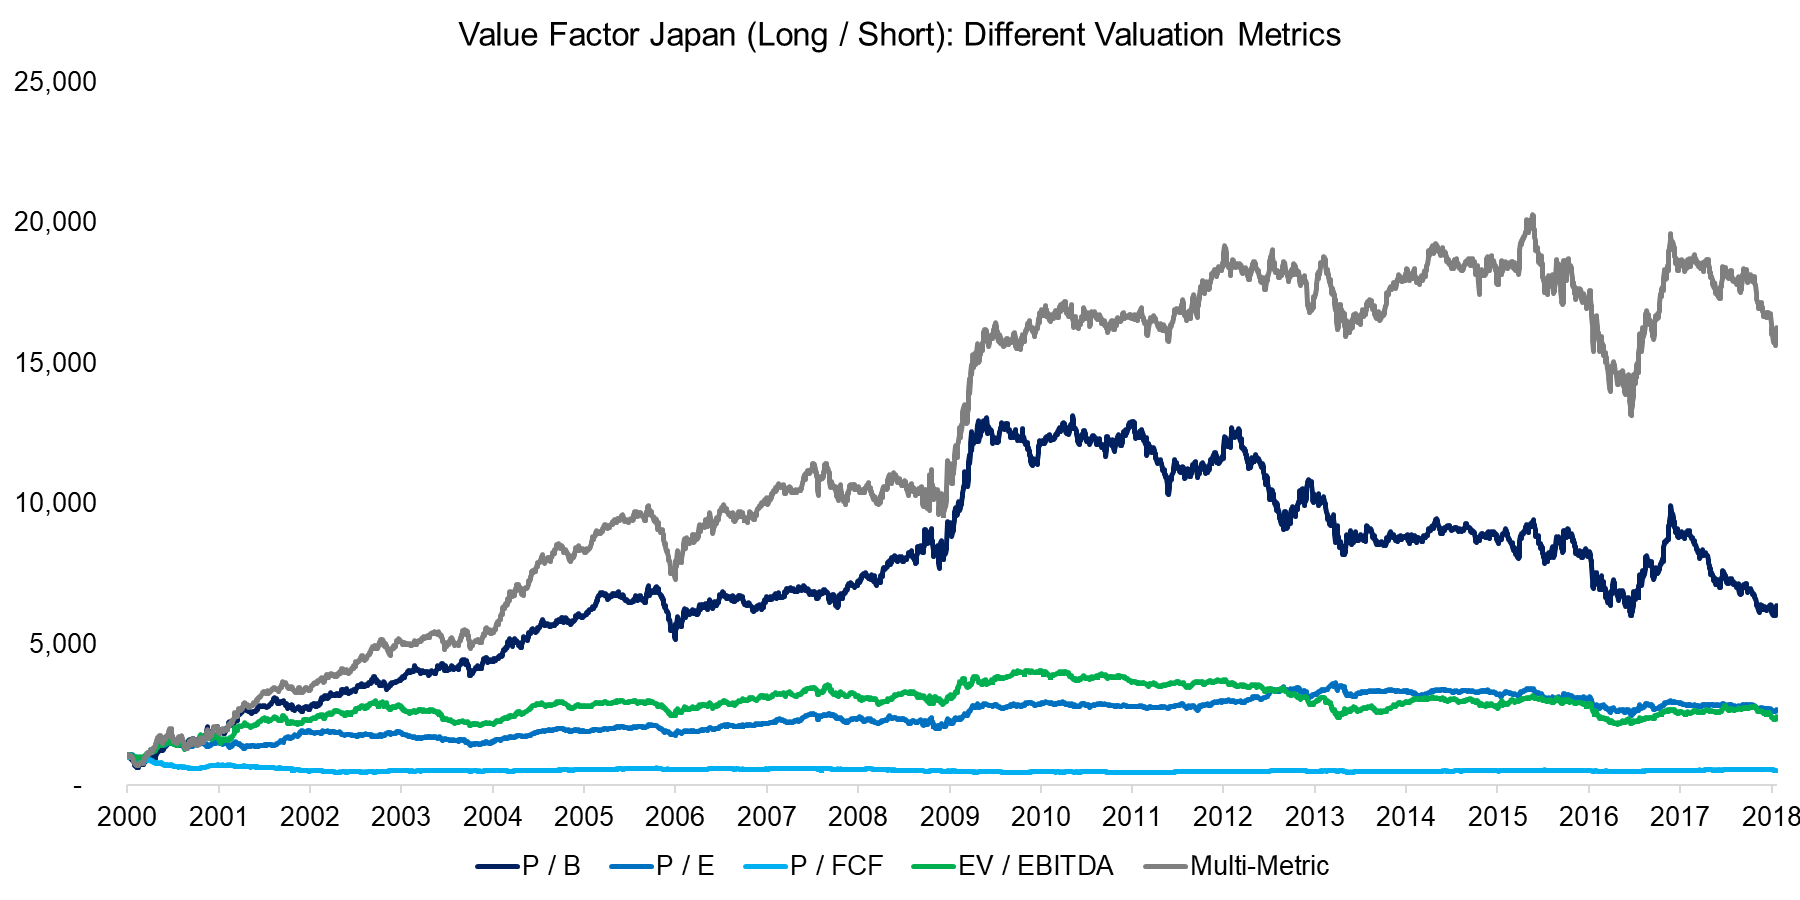 Value Factor Japan (Long Short) Different Valuation Metrics